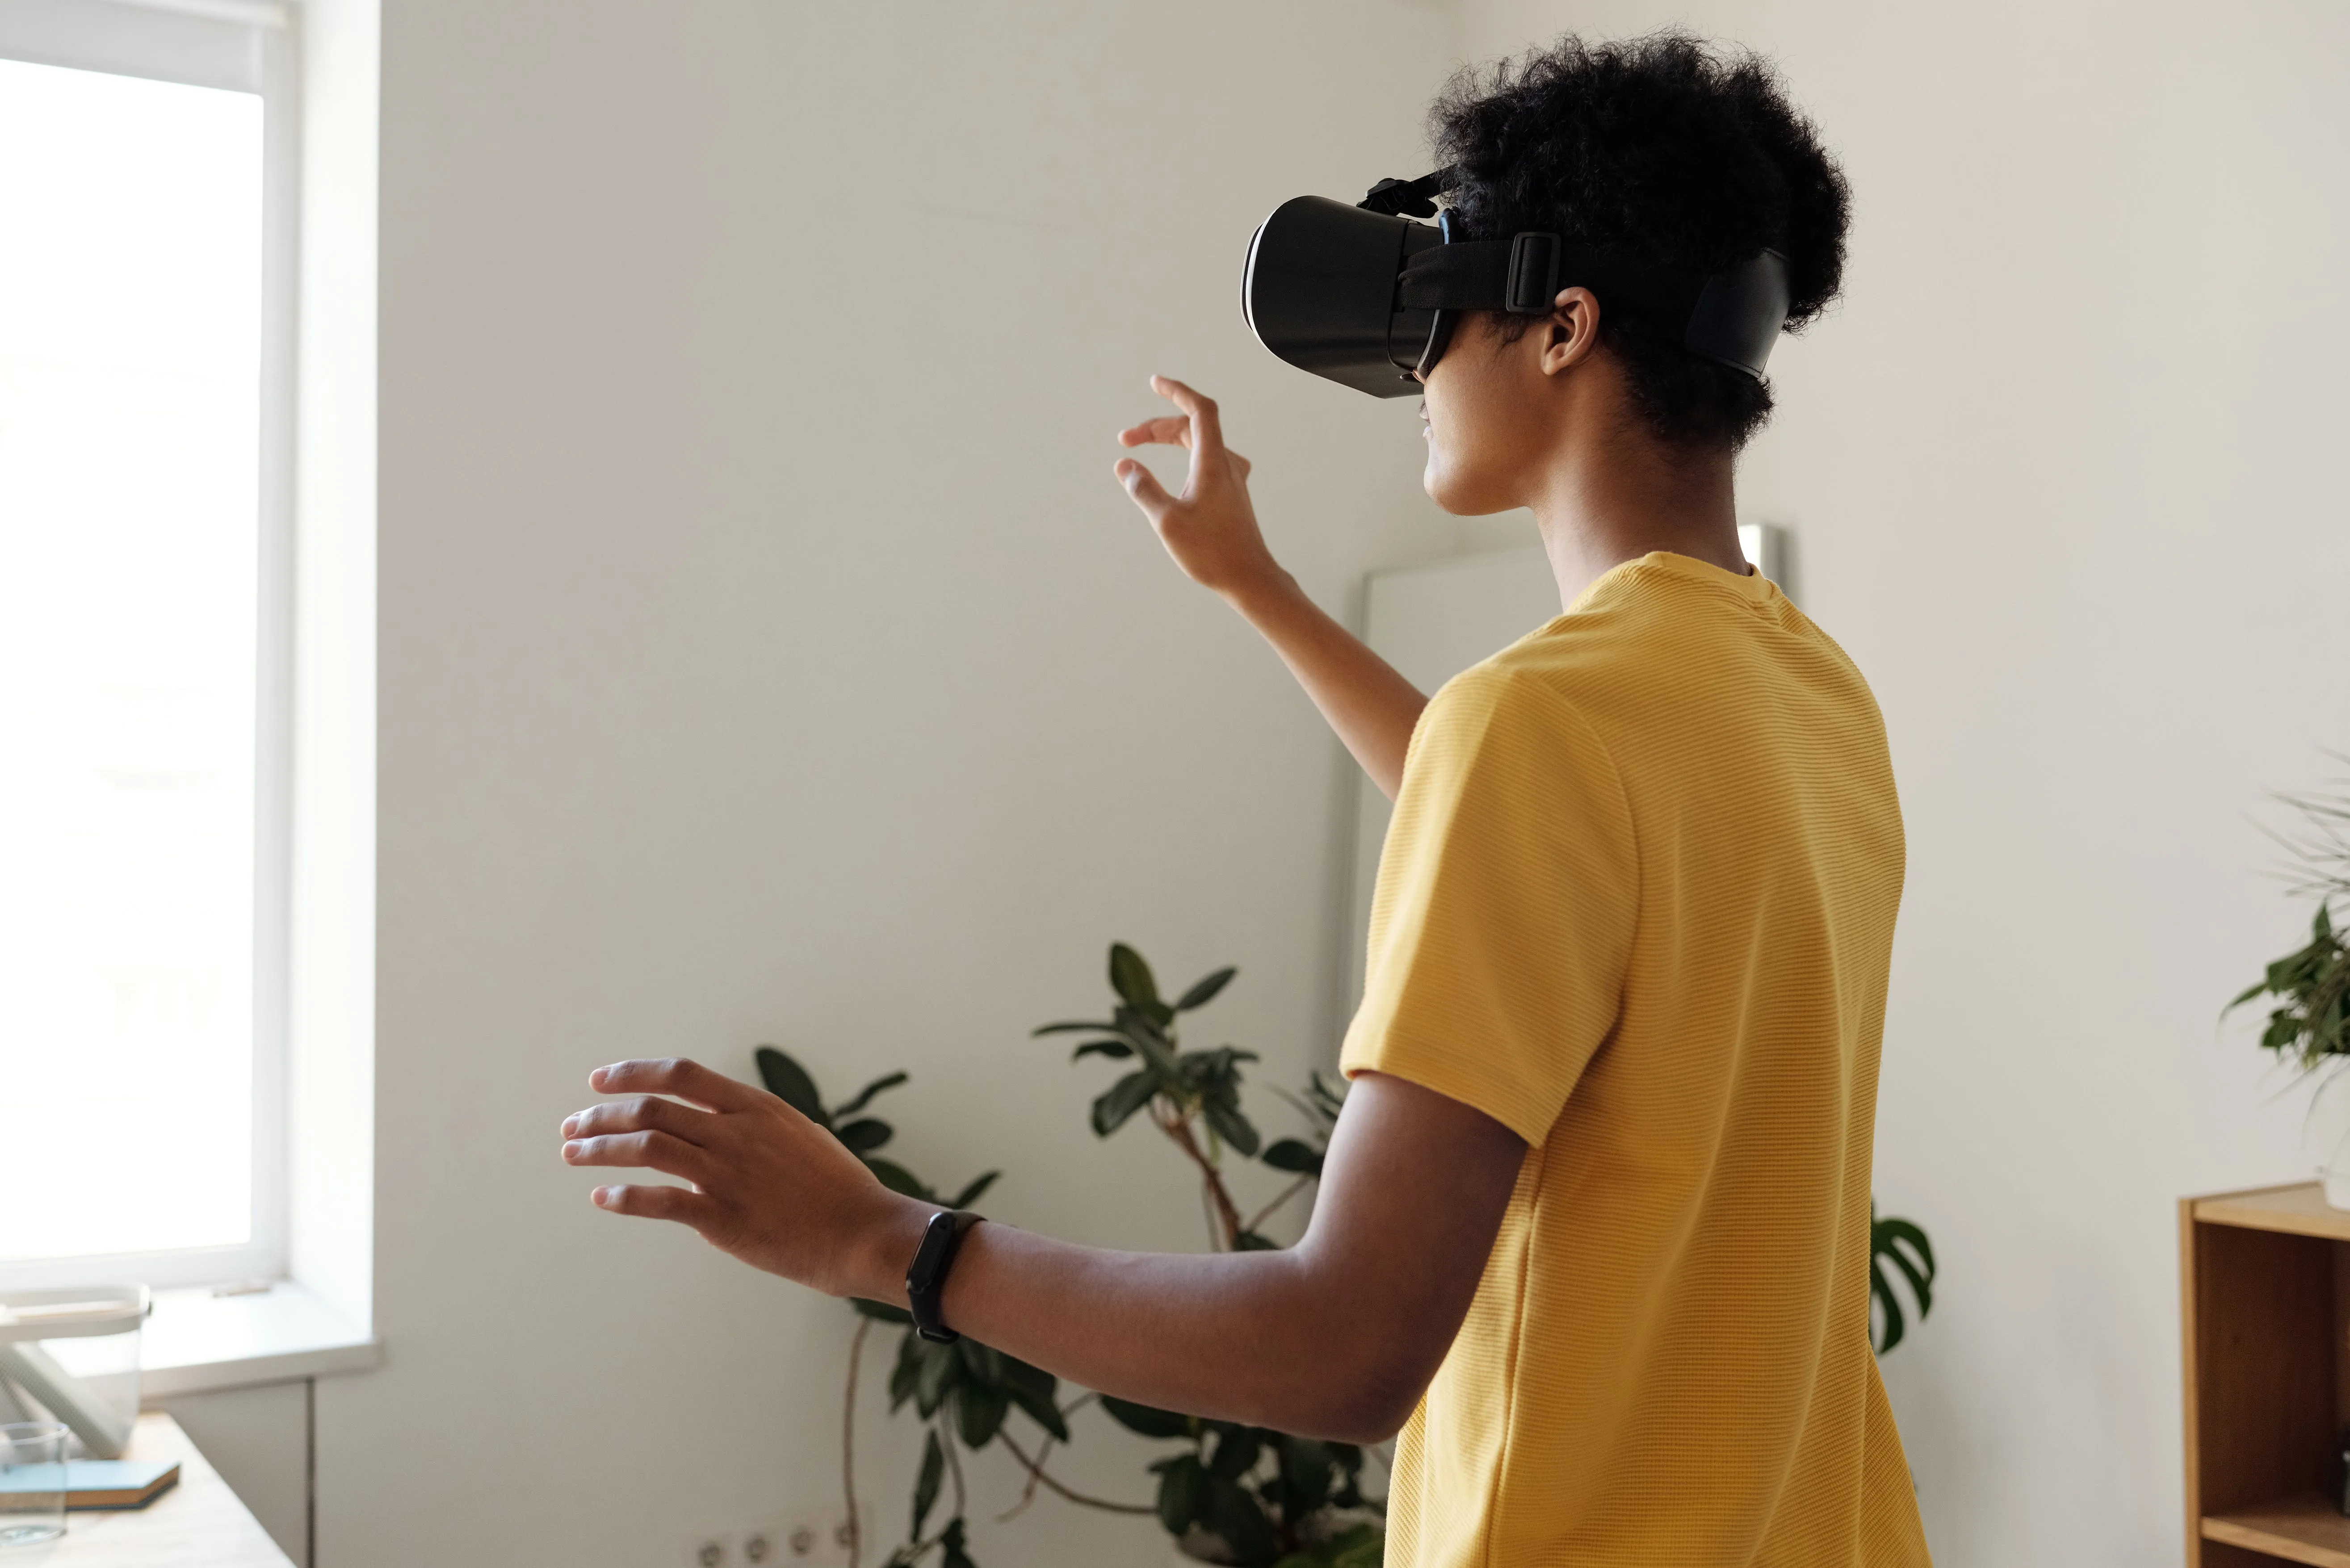 The Impact of Virtual Reality on Entertainment